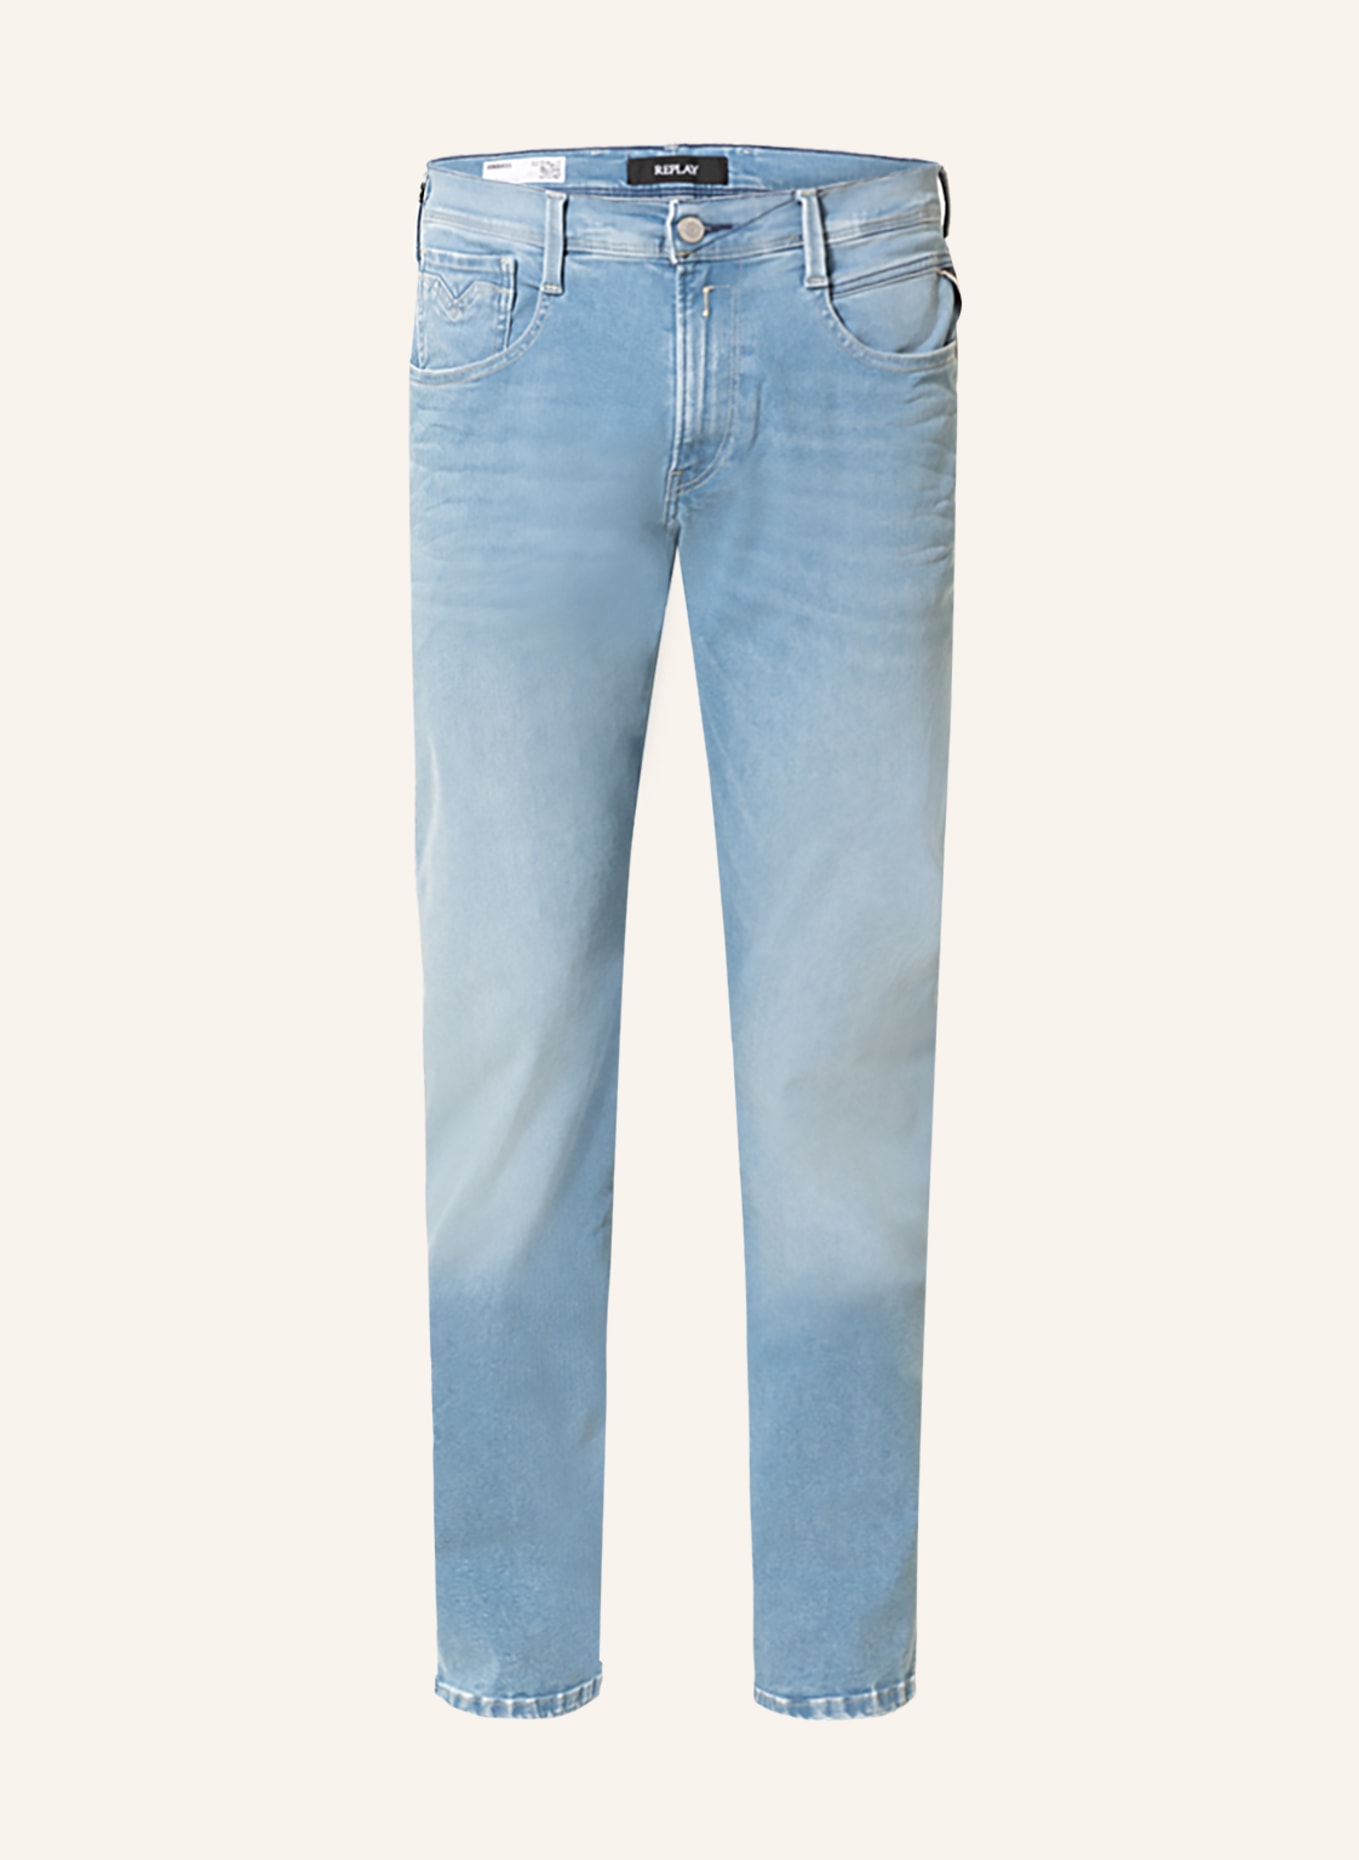 REPLAY Jeans Slim Fit, Farbe: 010 LIGHT BLUE (Bild 1)